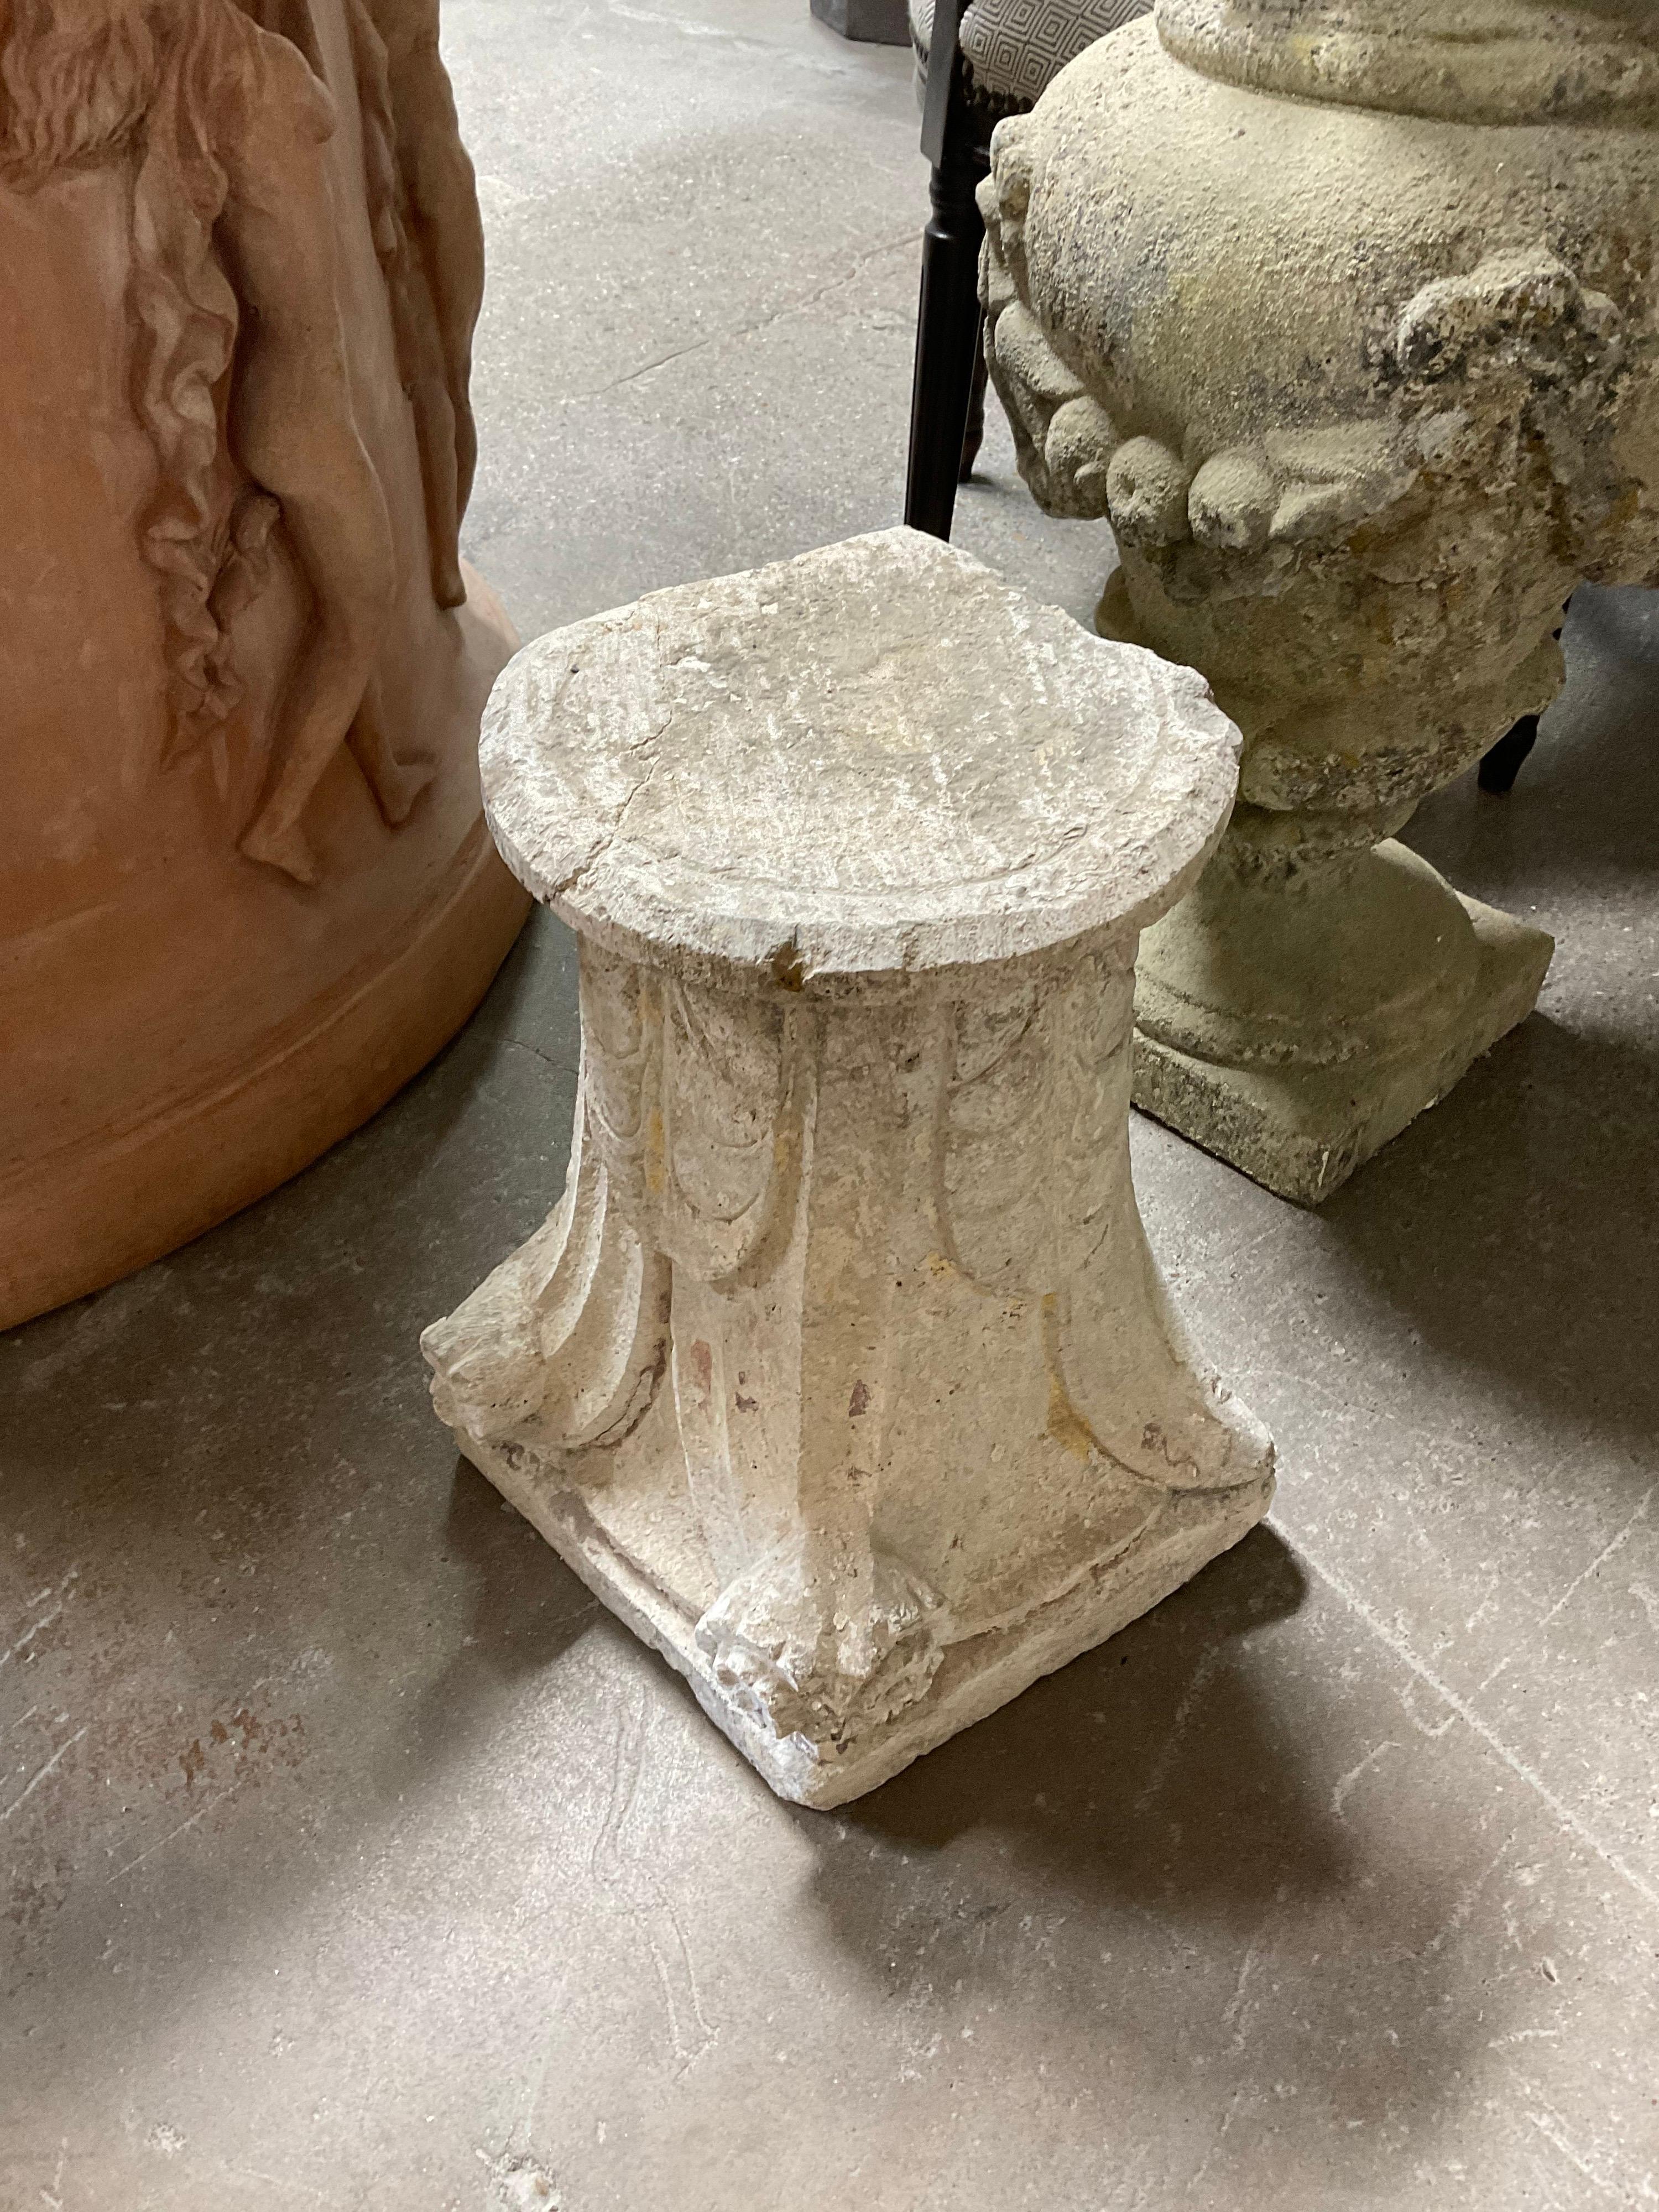 Rigid limestone pedestal from 1850s France.